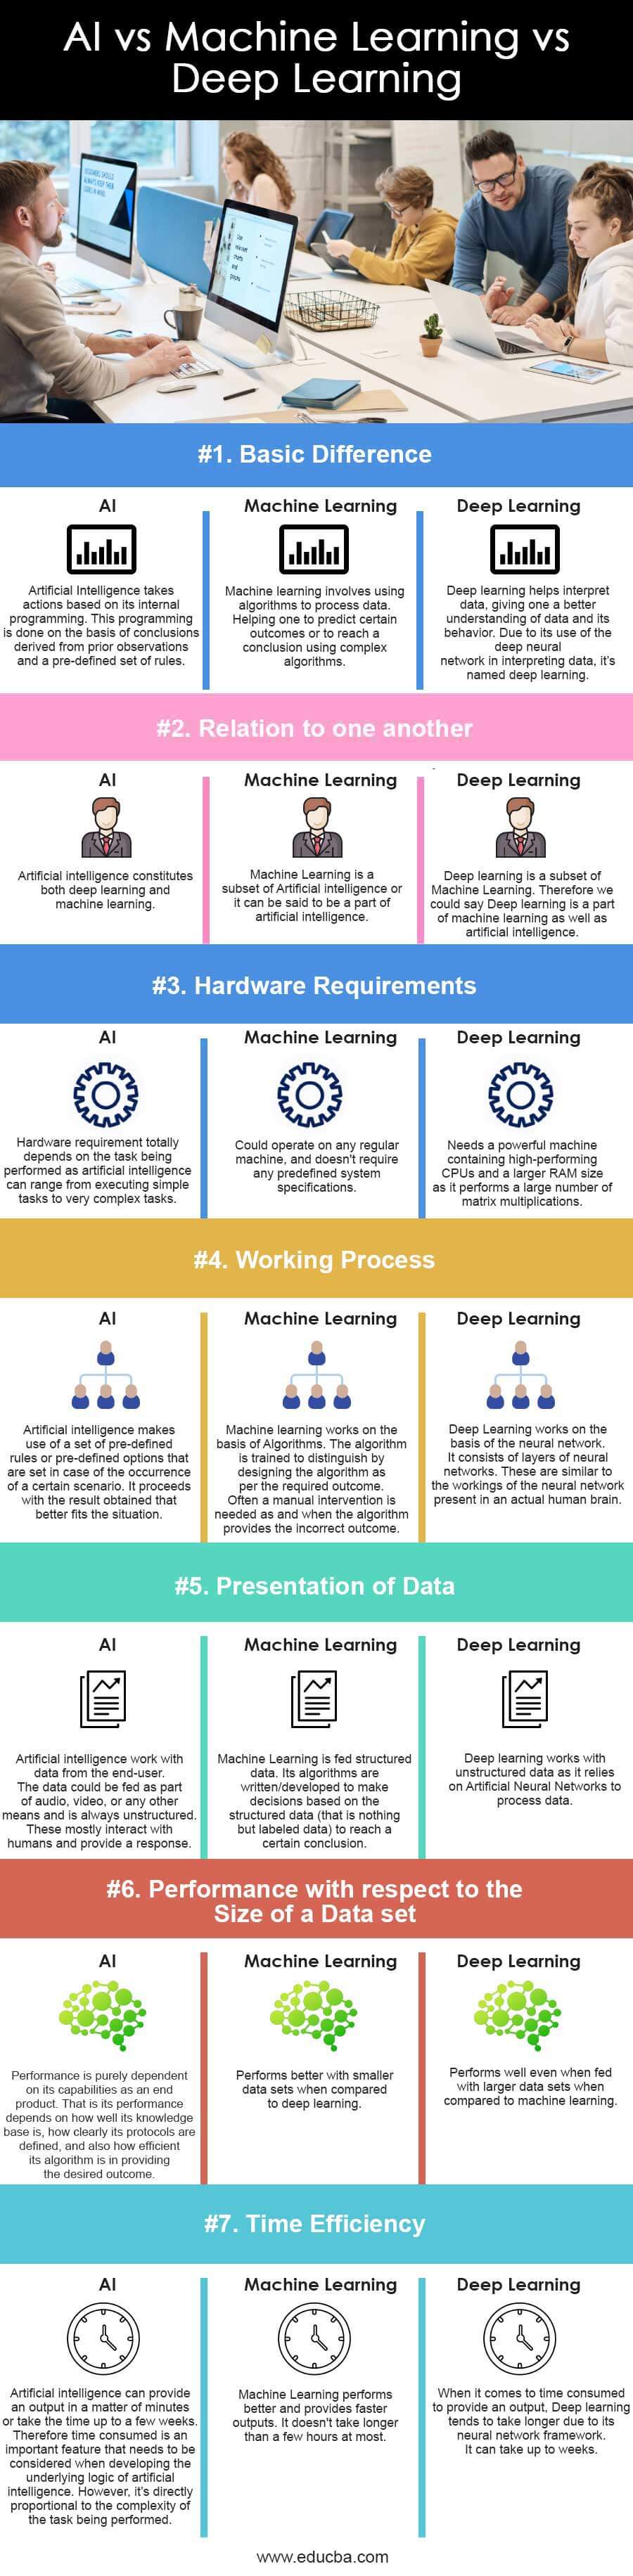 AI-vs-Machine-Learning-vs-Deep-Learning-info